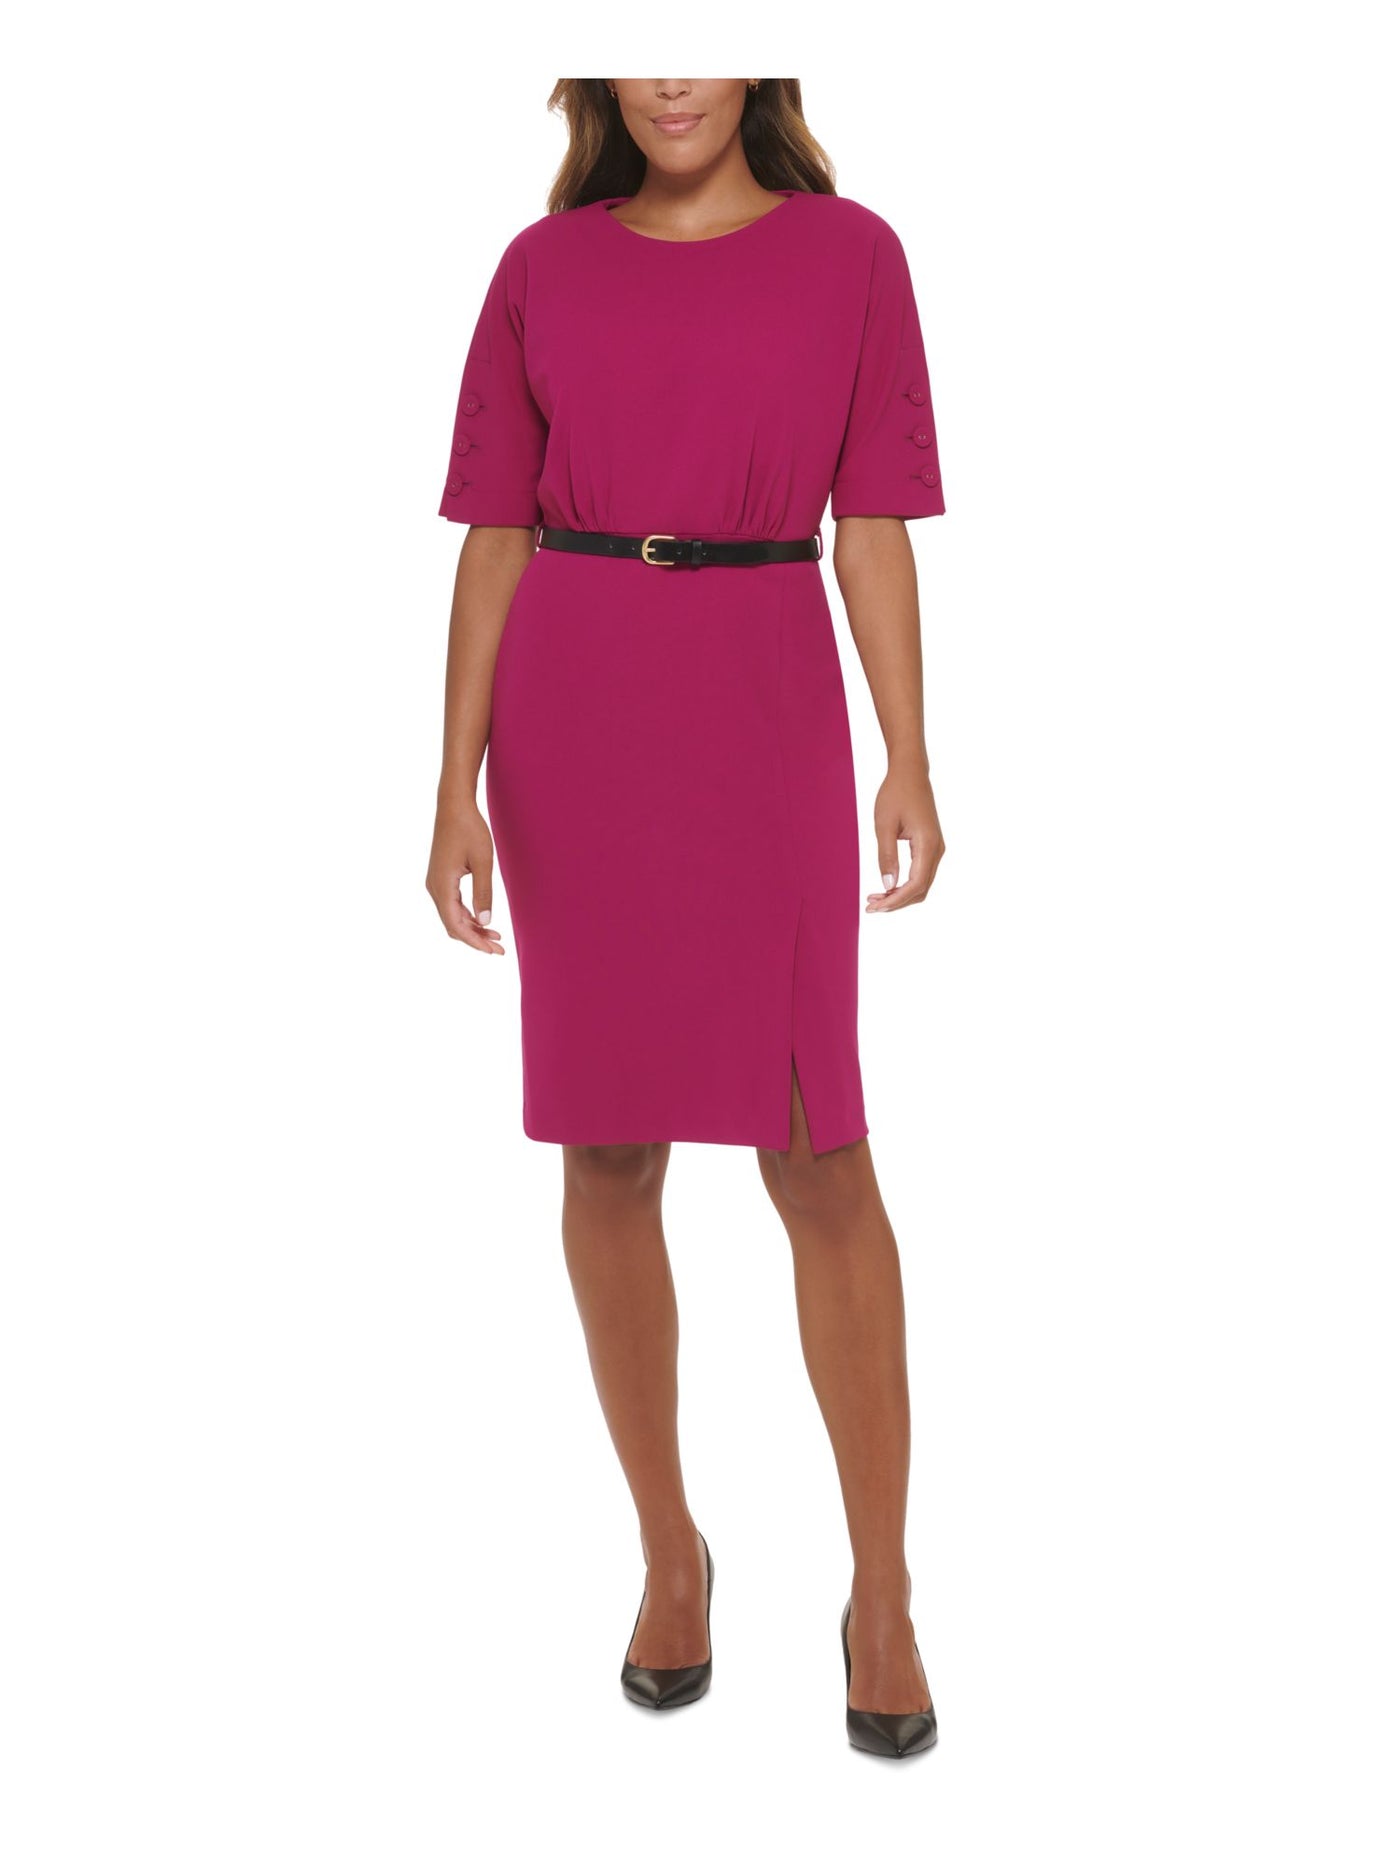 CALVIN KLEIN Womens Purple Zippered Belted Button Elbow Sleeves Slit Hem Round Neck Knee Length Wear To Work Sheath Dress Petites 6P